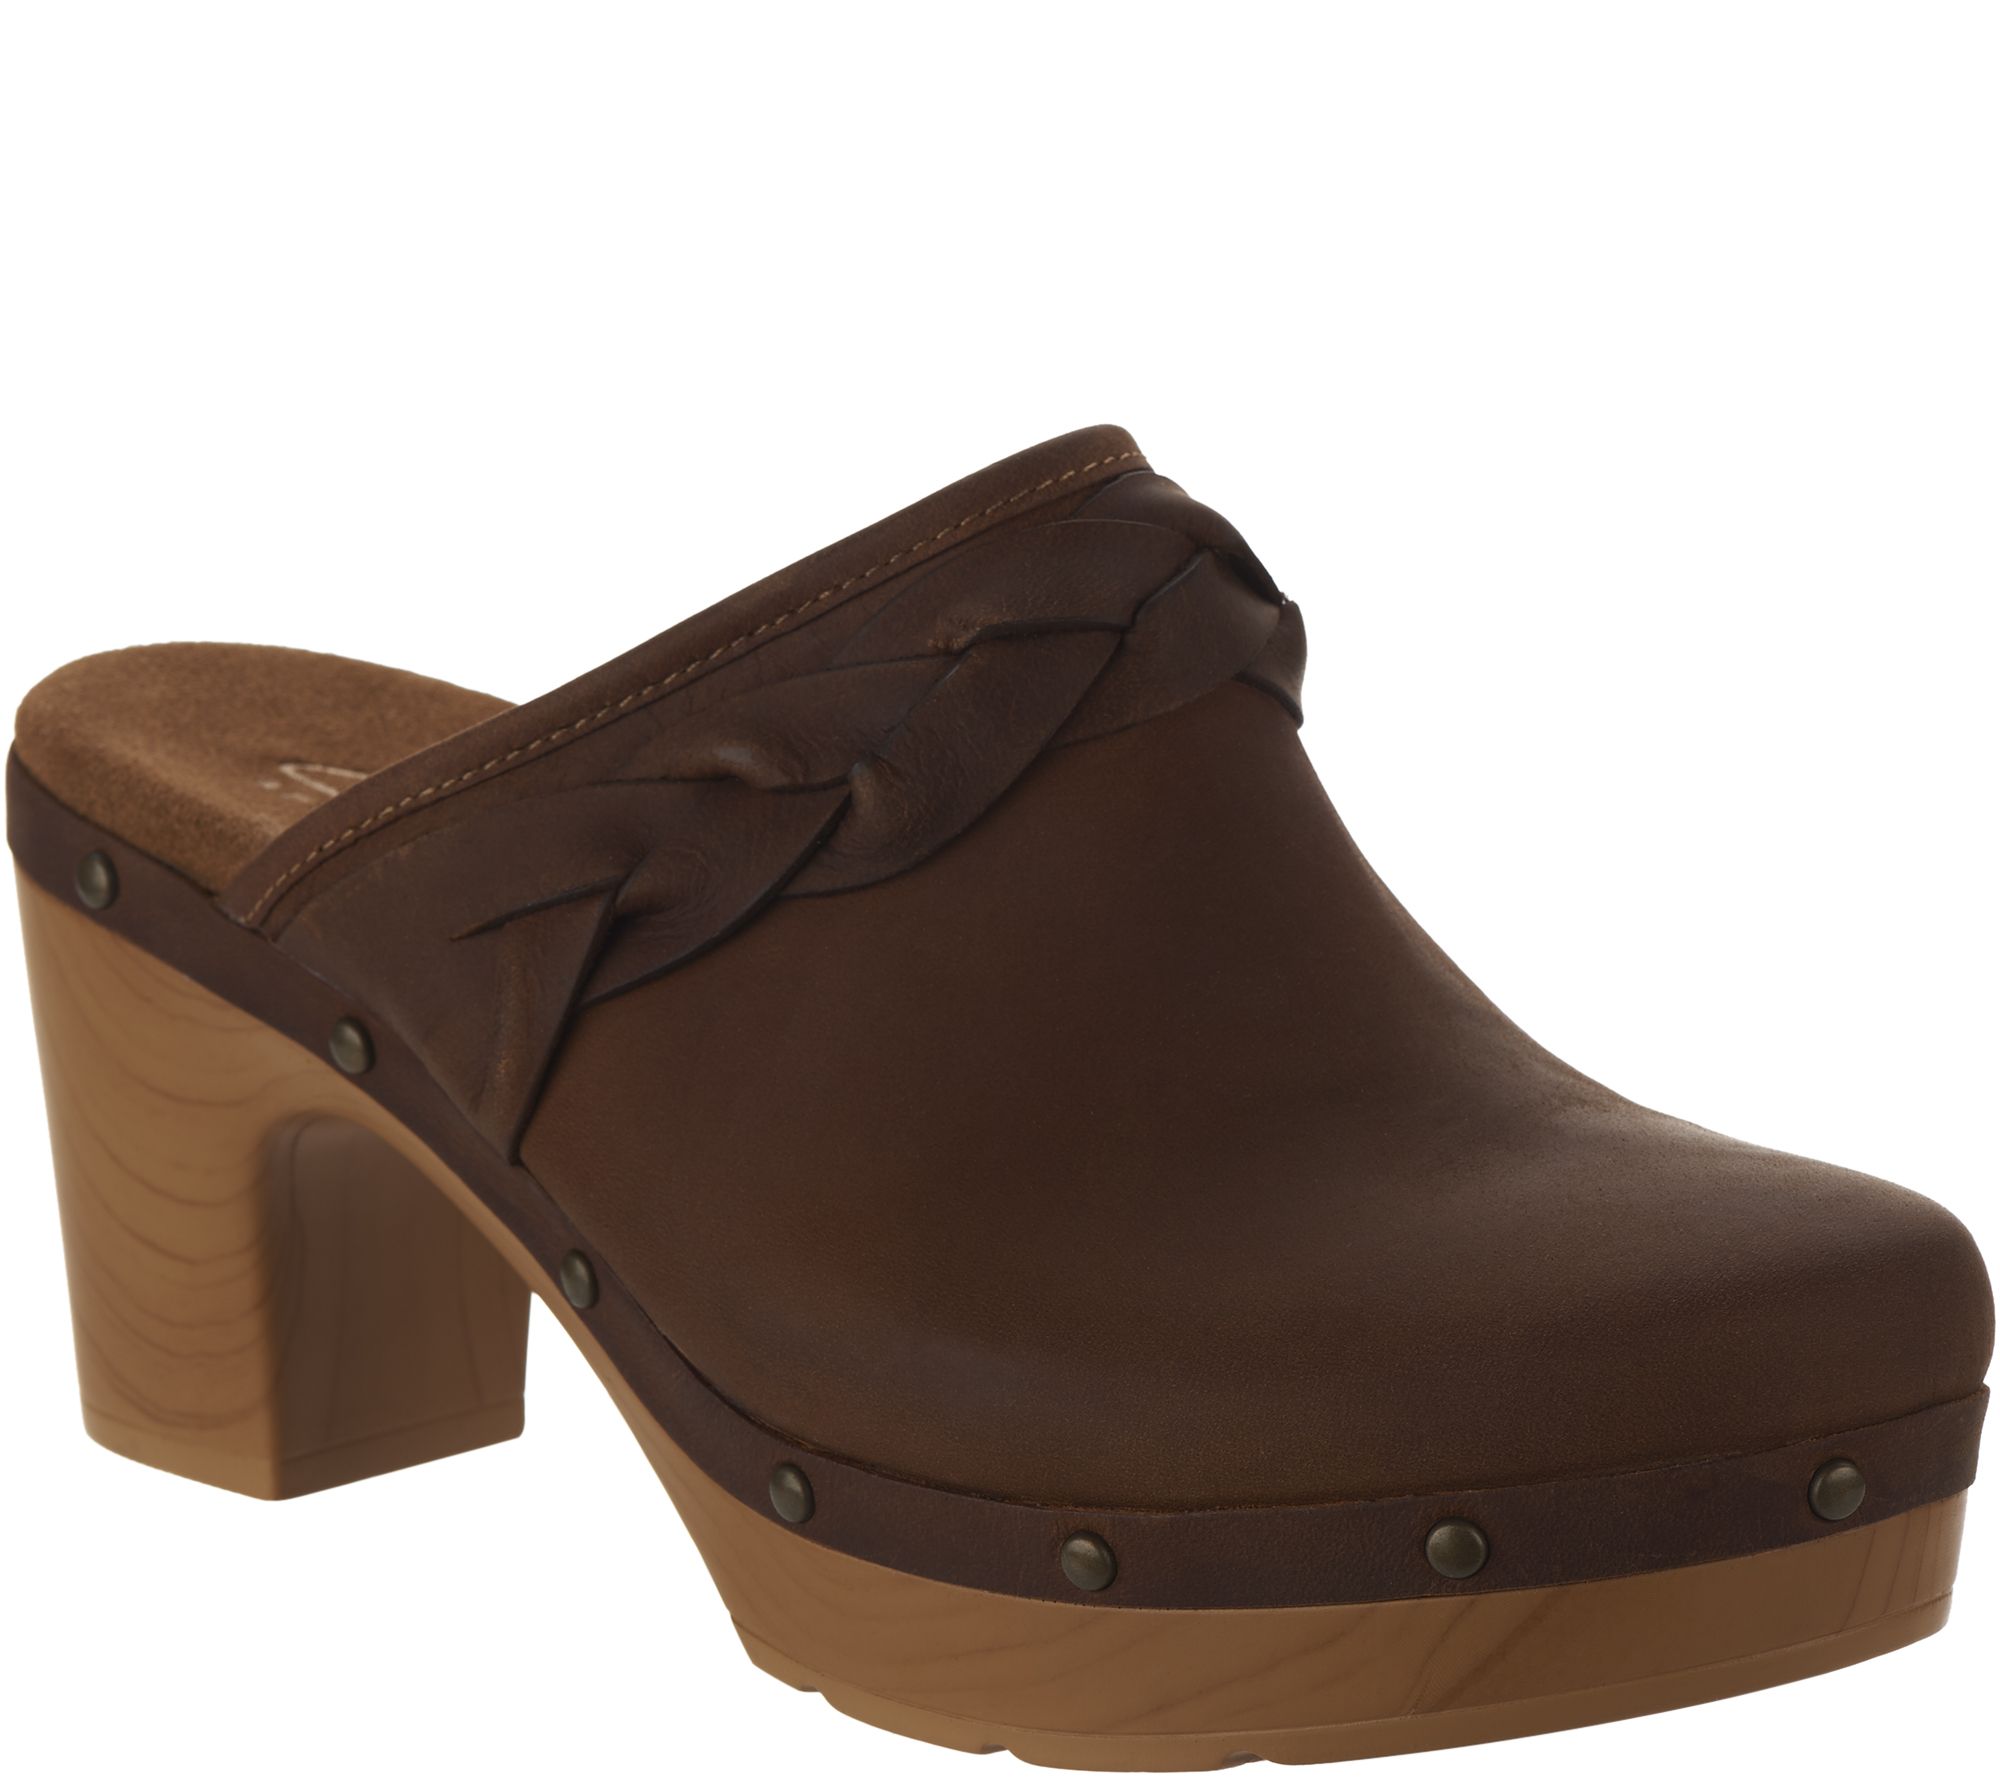 clog shoes clarks artisan leather clogs - ledella meg - page 1 - qvc.com HIAGWME